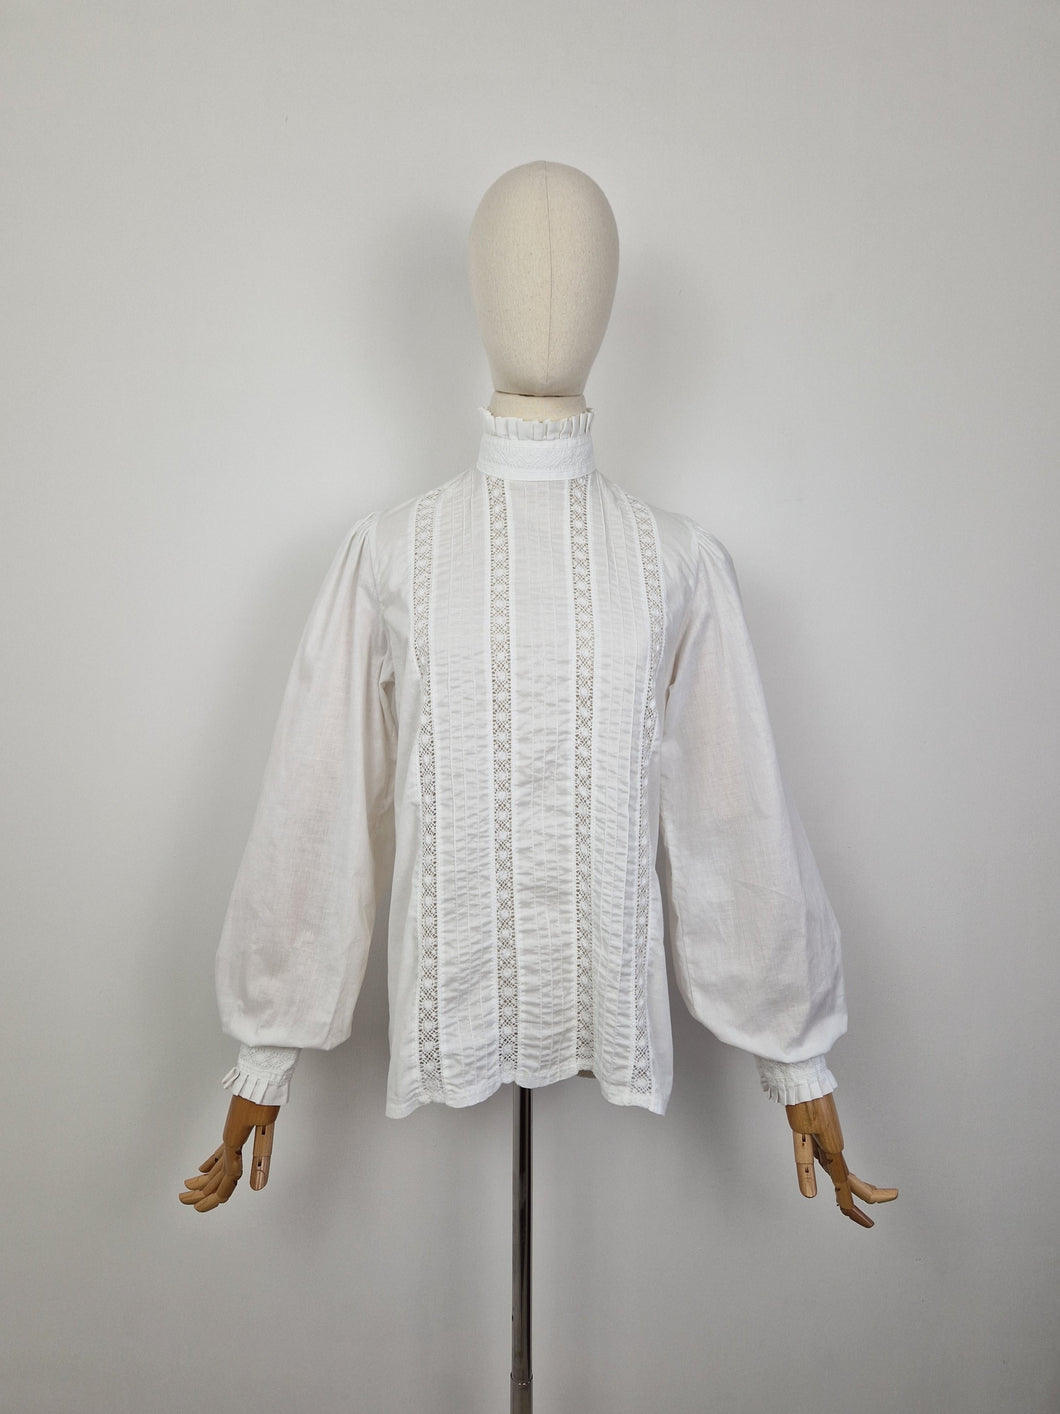 Vintage 80s Laura Ashley prairie blouse